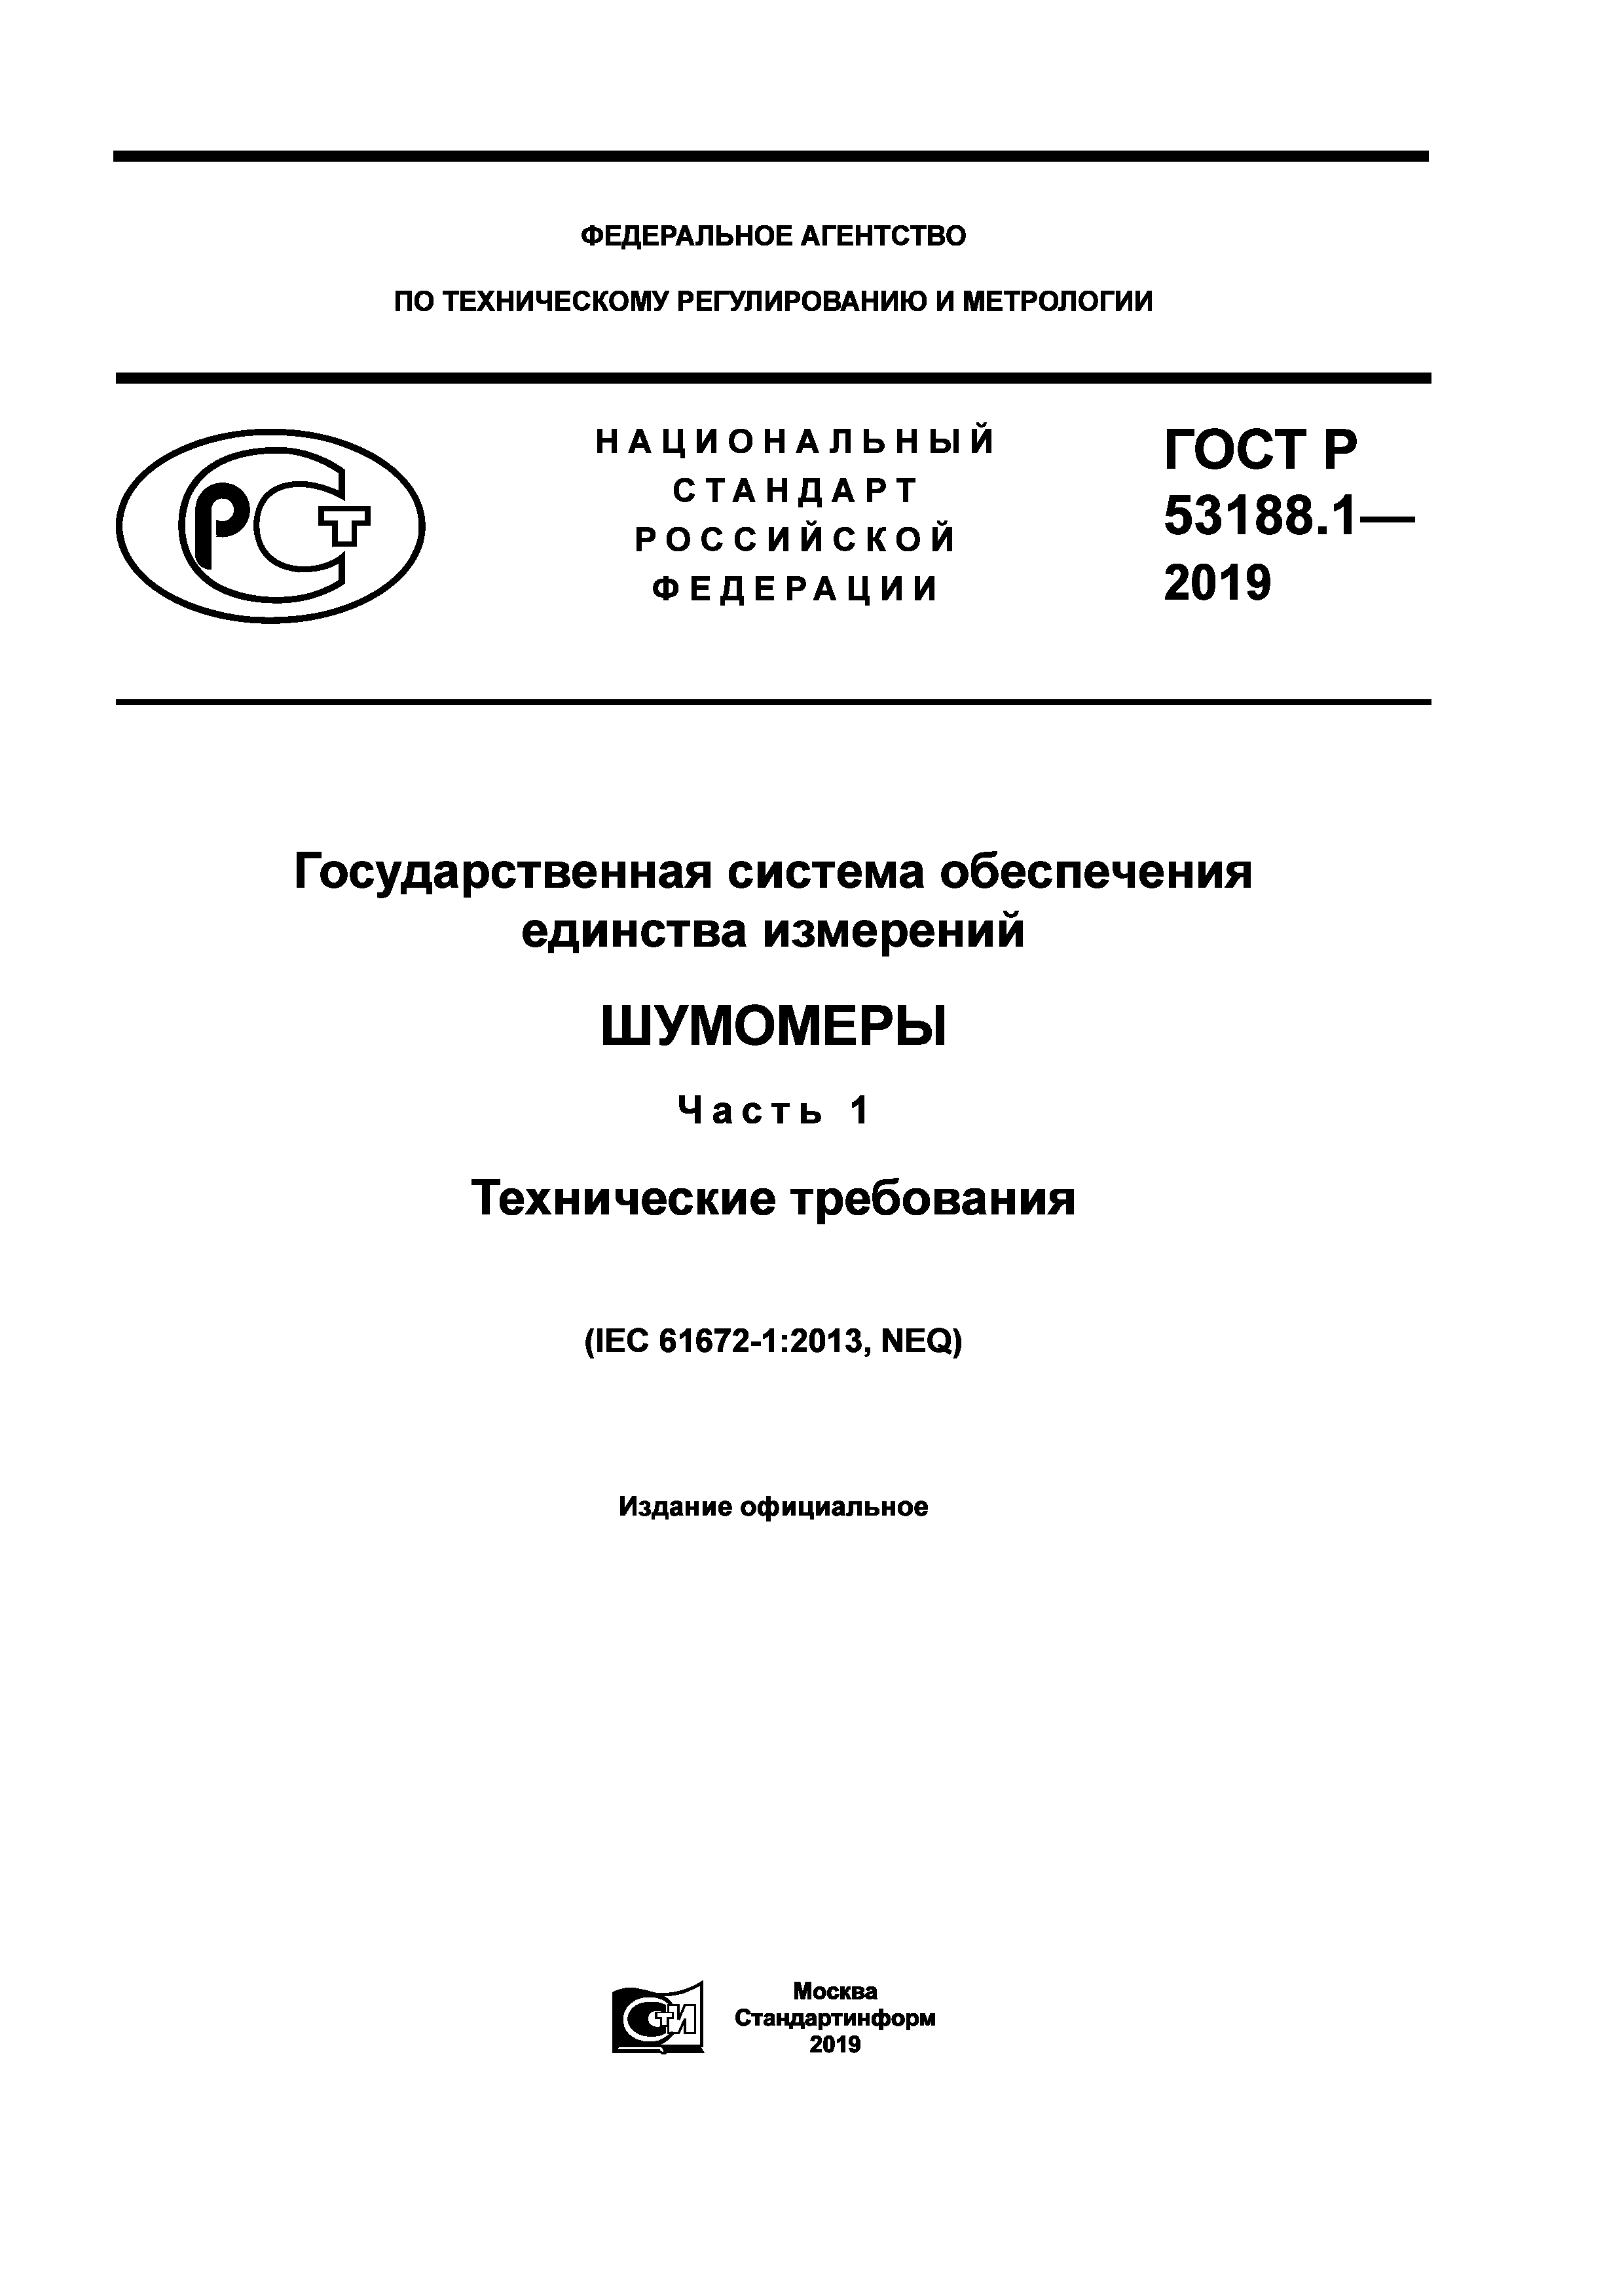 ГОСТ Р 53188.1-2019